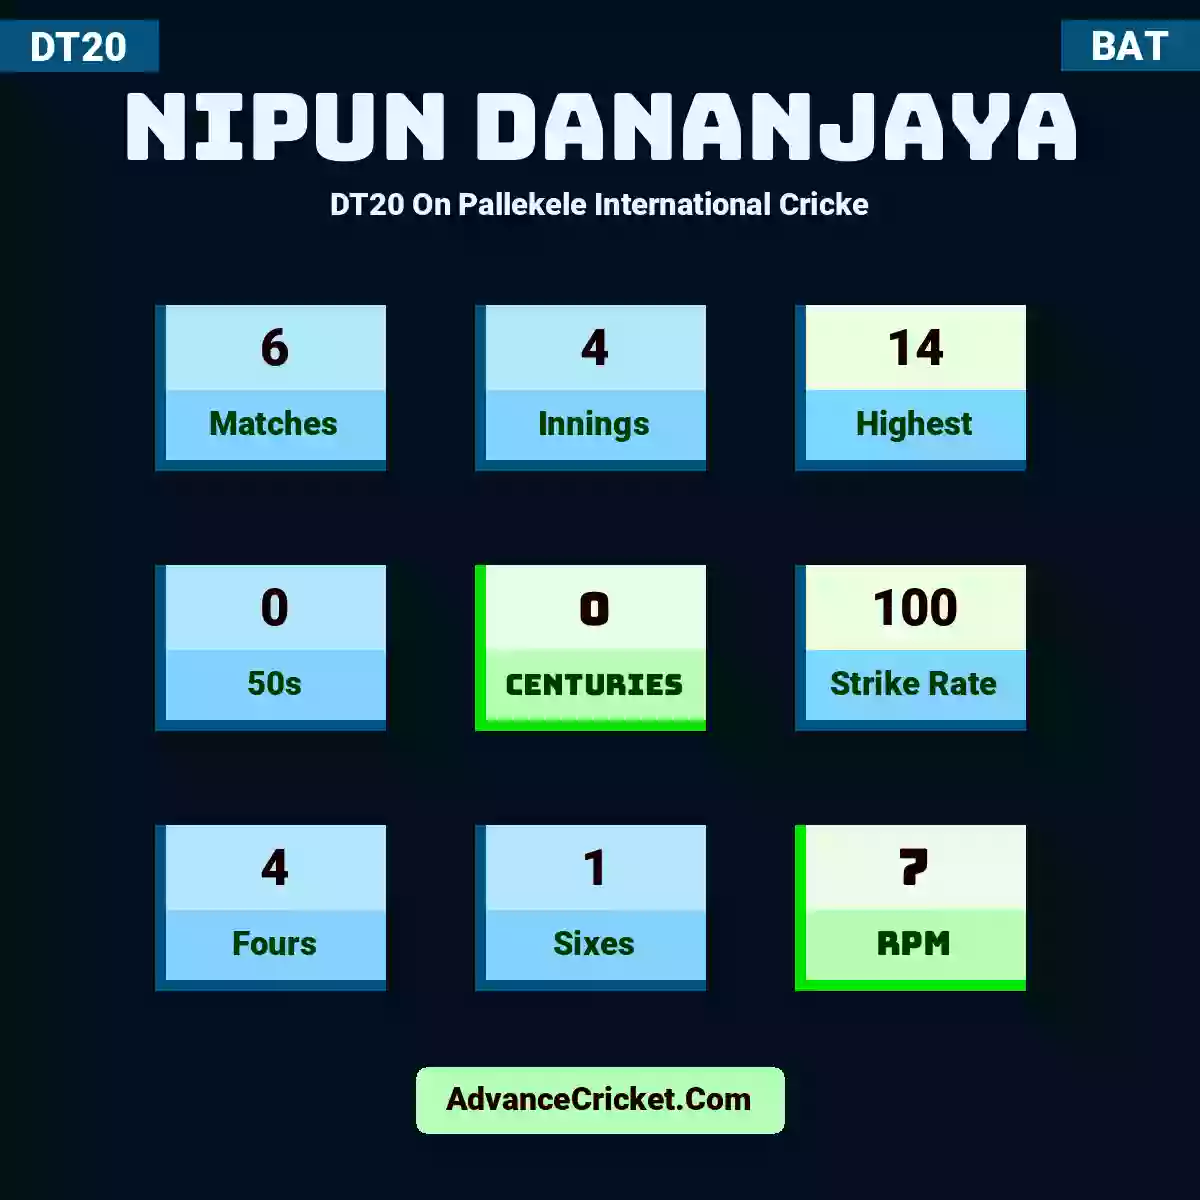 Nipun Dananjaya DT20  On Pallekele International Cricke, Nipun Dananjaya played 6 matches, scored 14 runs as highest, 0 half-centuries, and 0 centuries, with a strike rate of 100. N.Dananjaya hit 4 fours and 1 sixes, with an RPM of 7.